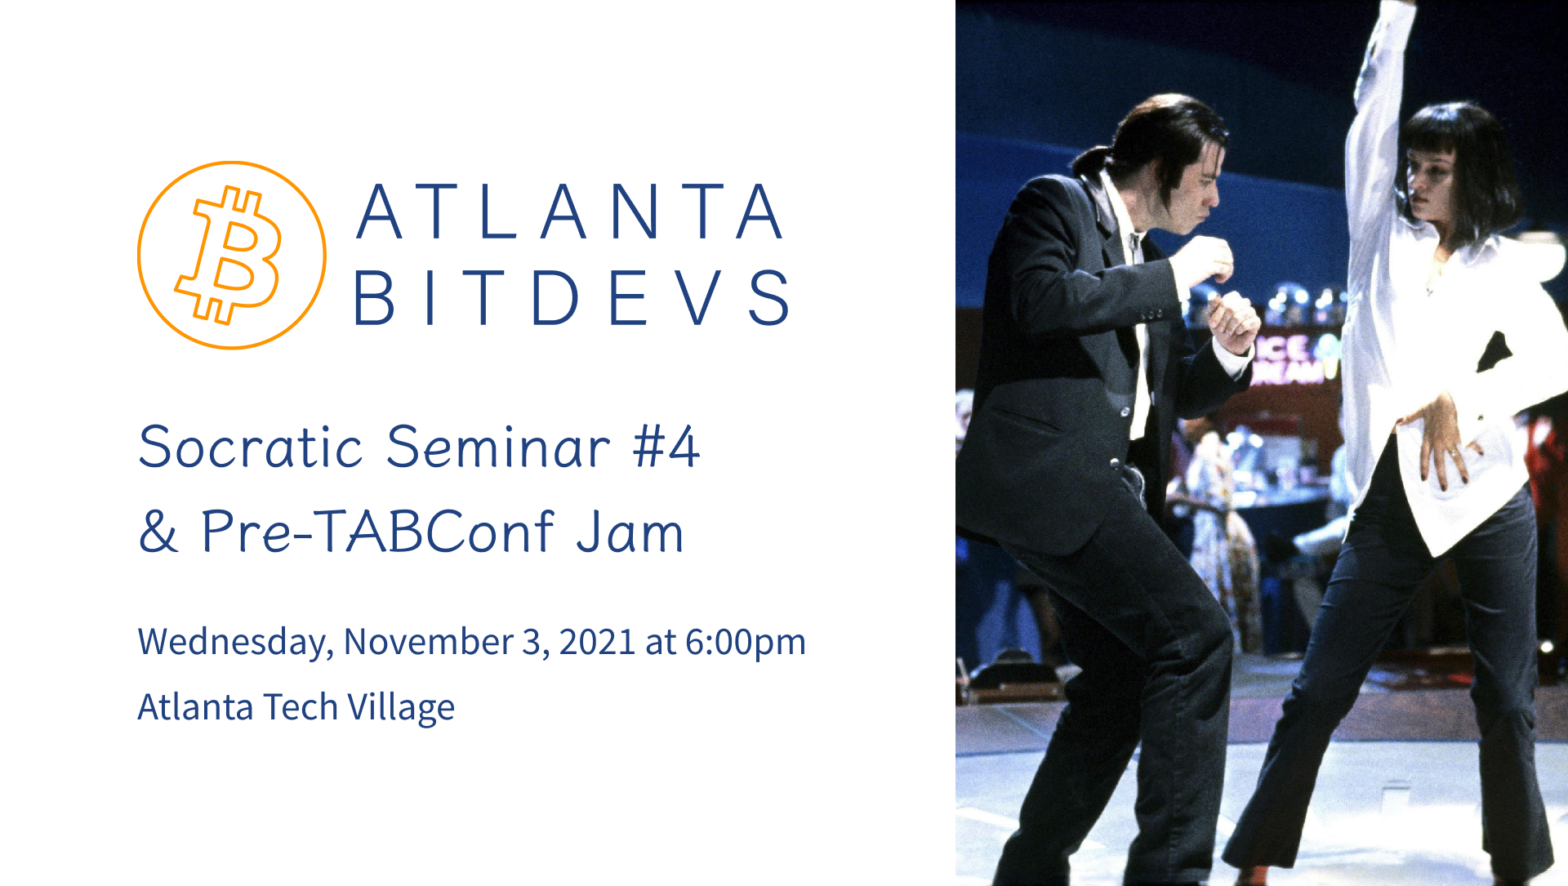 Poster for Atlanta BitDevs Socratic Seminar #4 and Pre-TABConf Jam